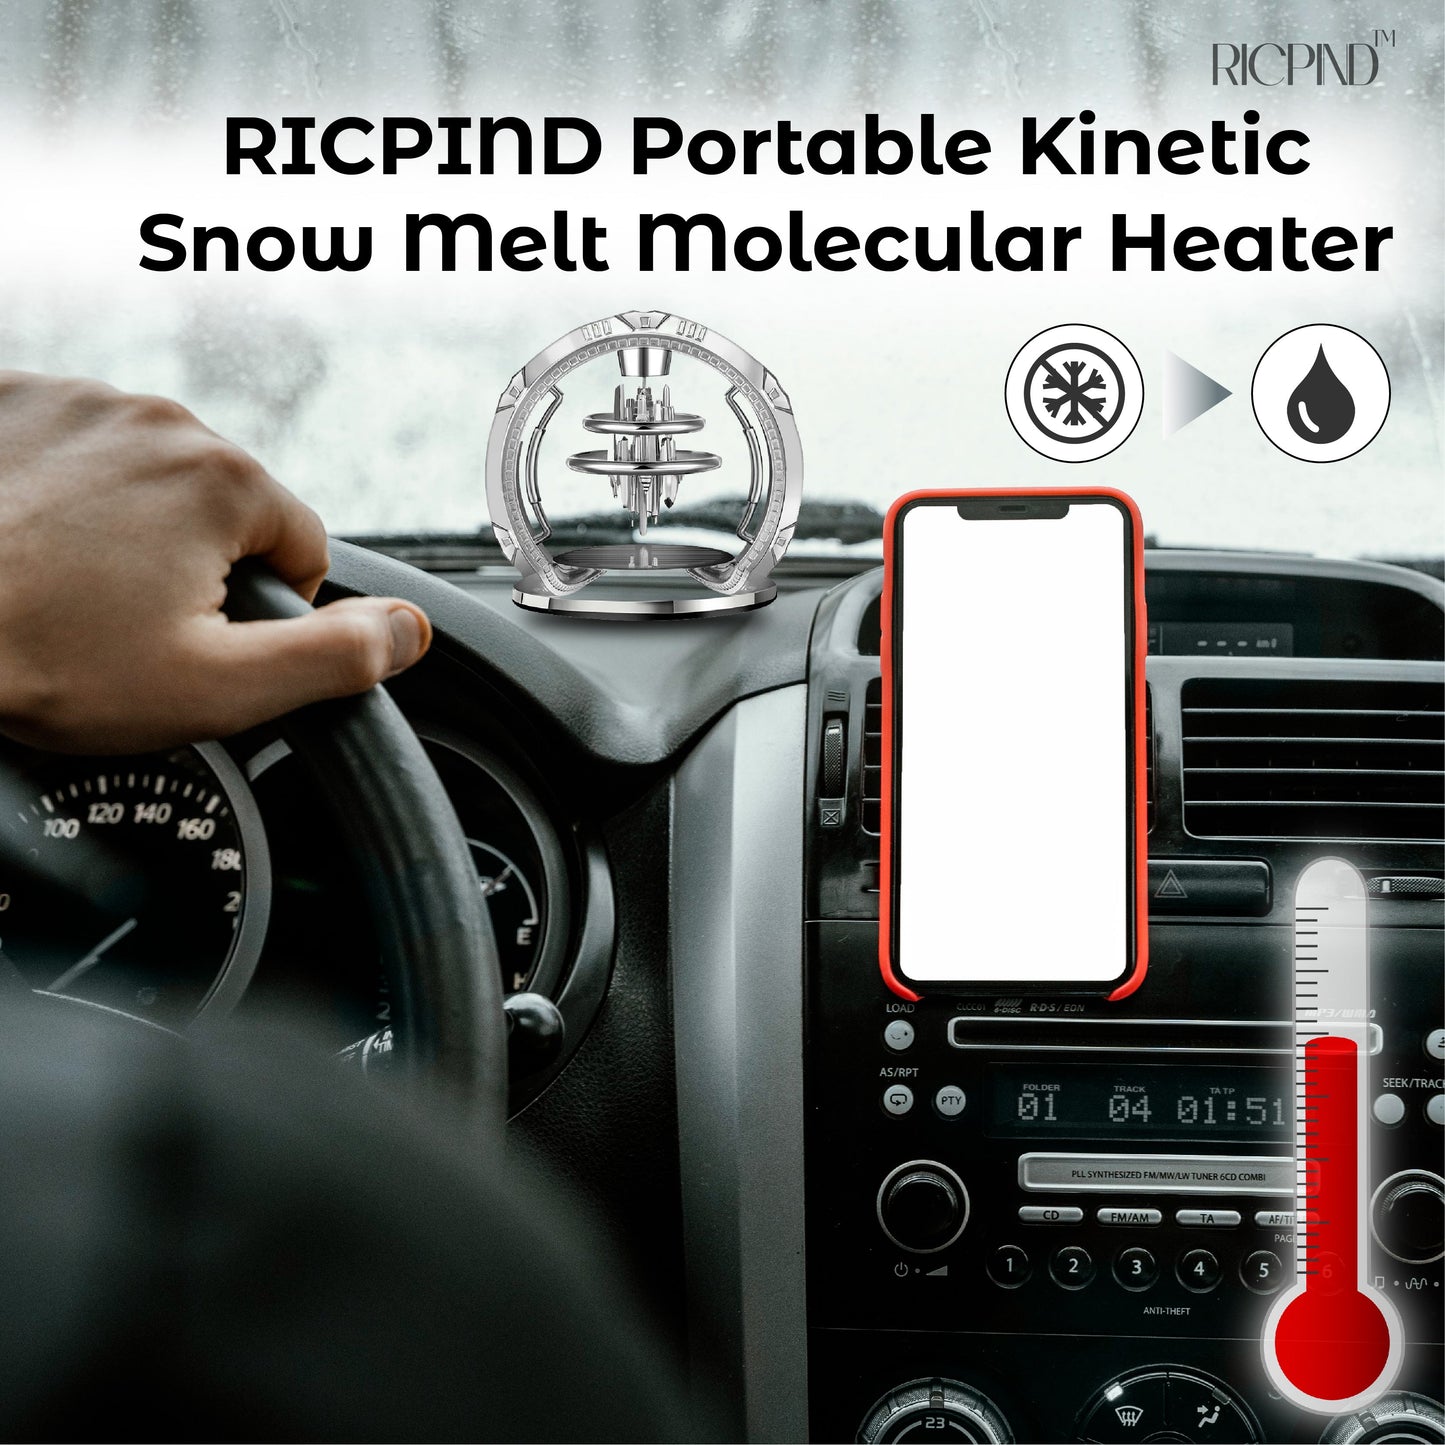 RICPIND Portable Kinetic Snow Melt Molecular Heater